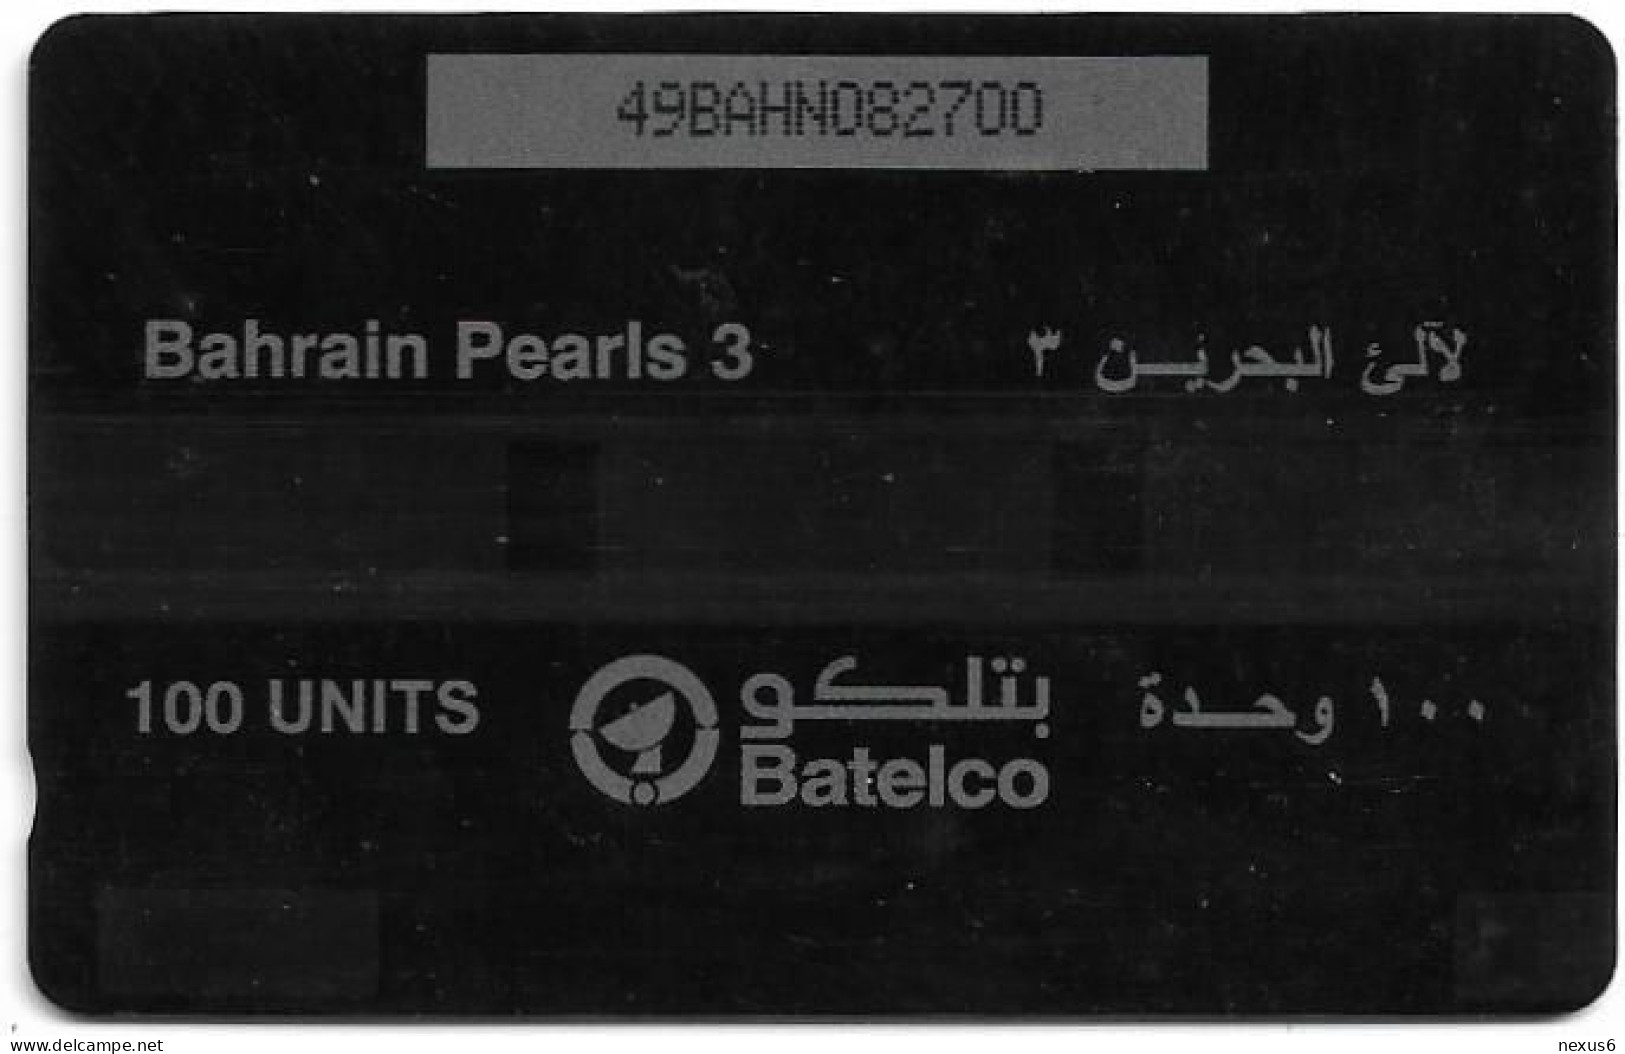 Bahrain - Batelco (GPT) - Pearls 3 - 49BAHN - 2001, Used - Bahrein